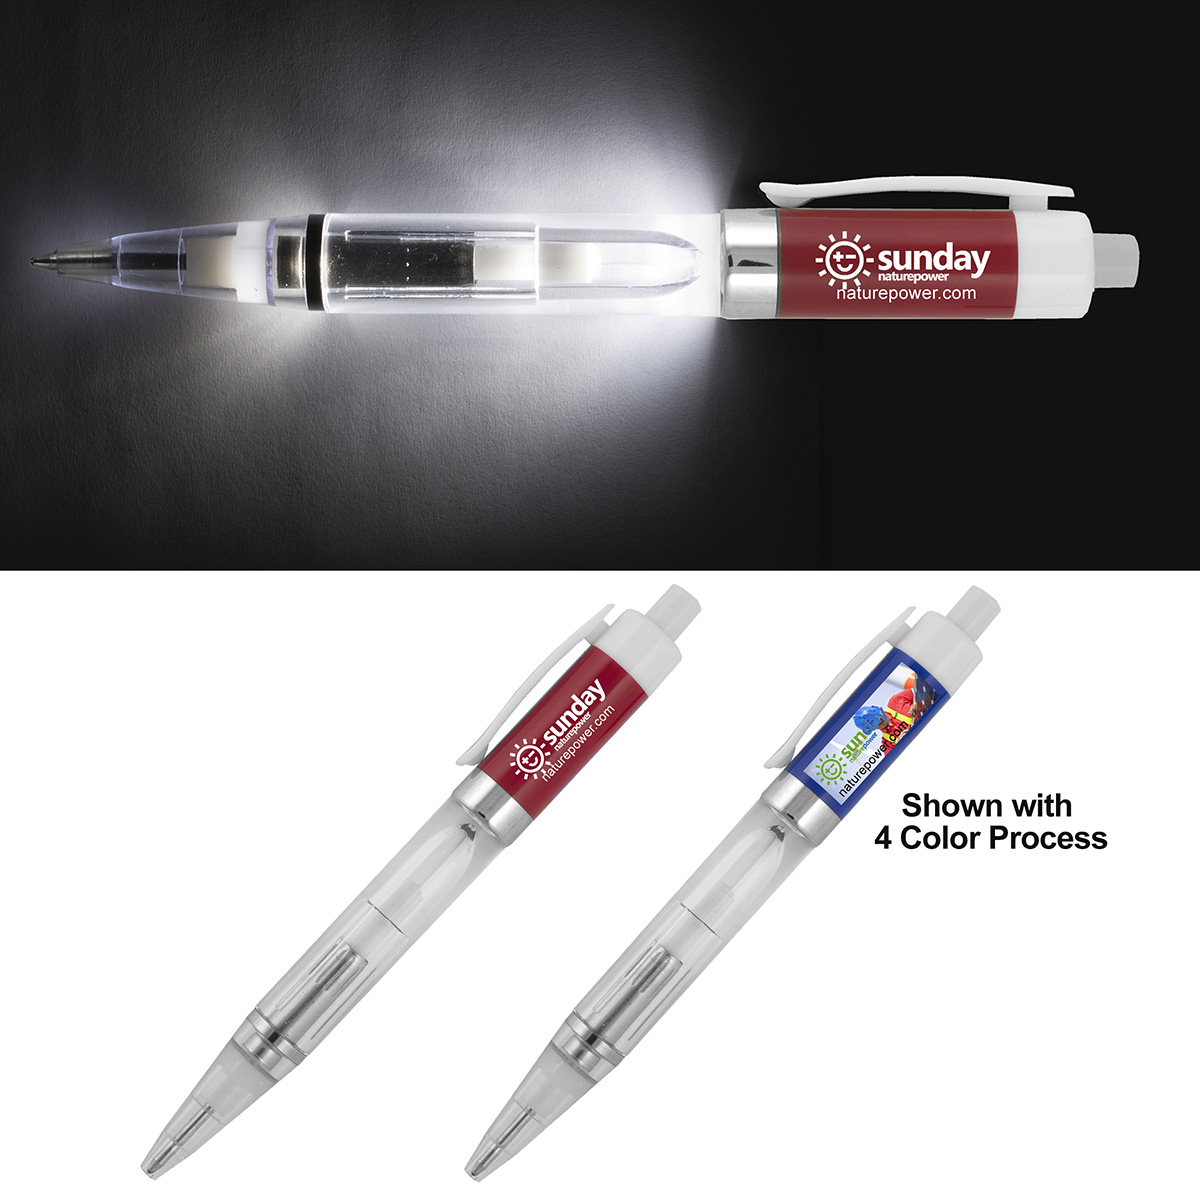 "REYES" Light Up Pen with White Color LED Light